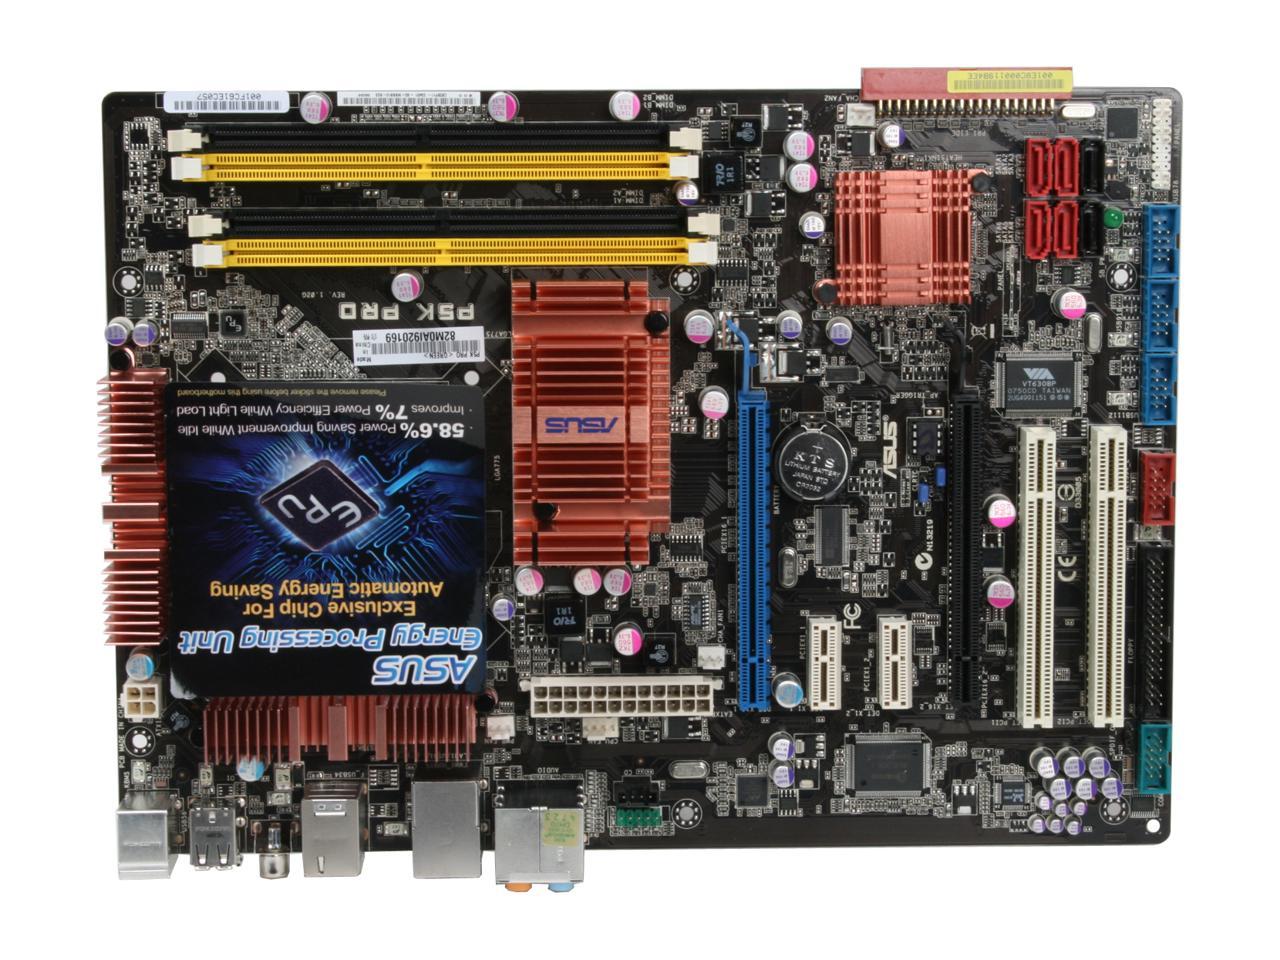 ASUS P5K PRO LGA 775 ATX Intel Motherboard - Newegg.com